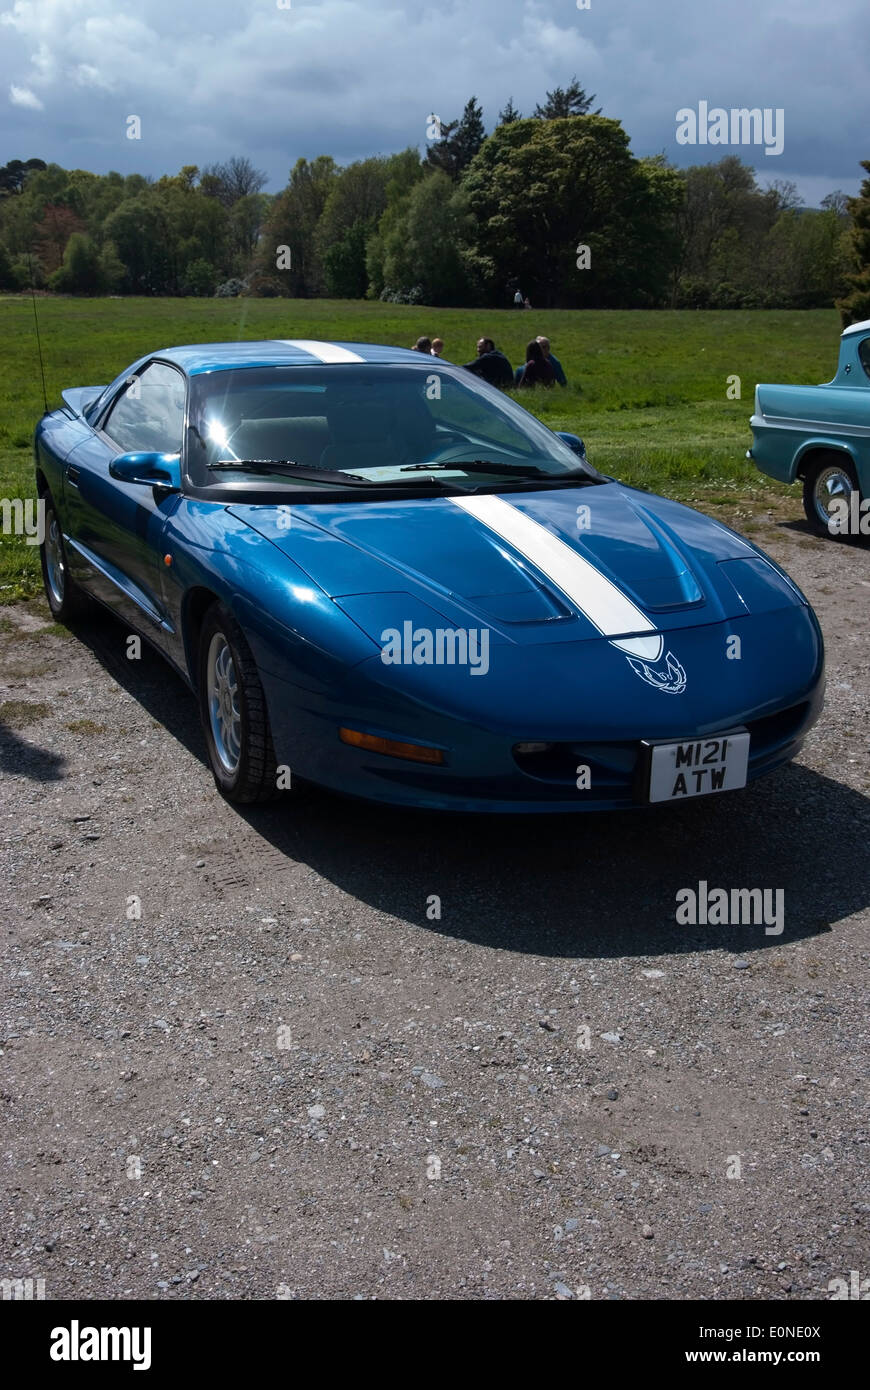 1994 Model Royal Blue Pontiac Firebird Limited Edition Motor Car Stock Photo